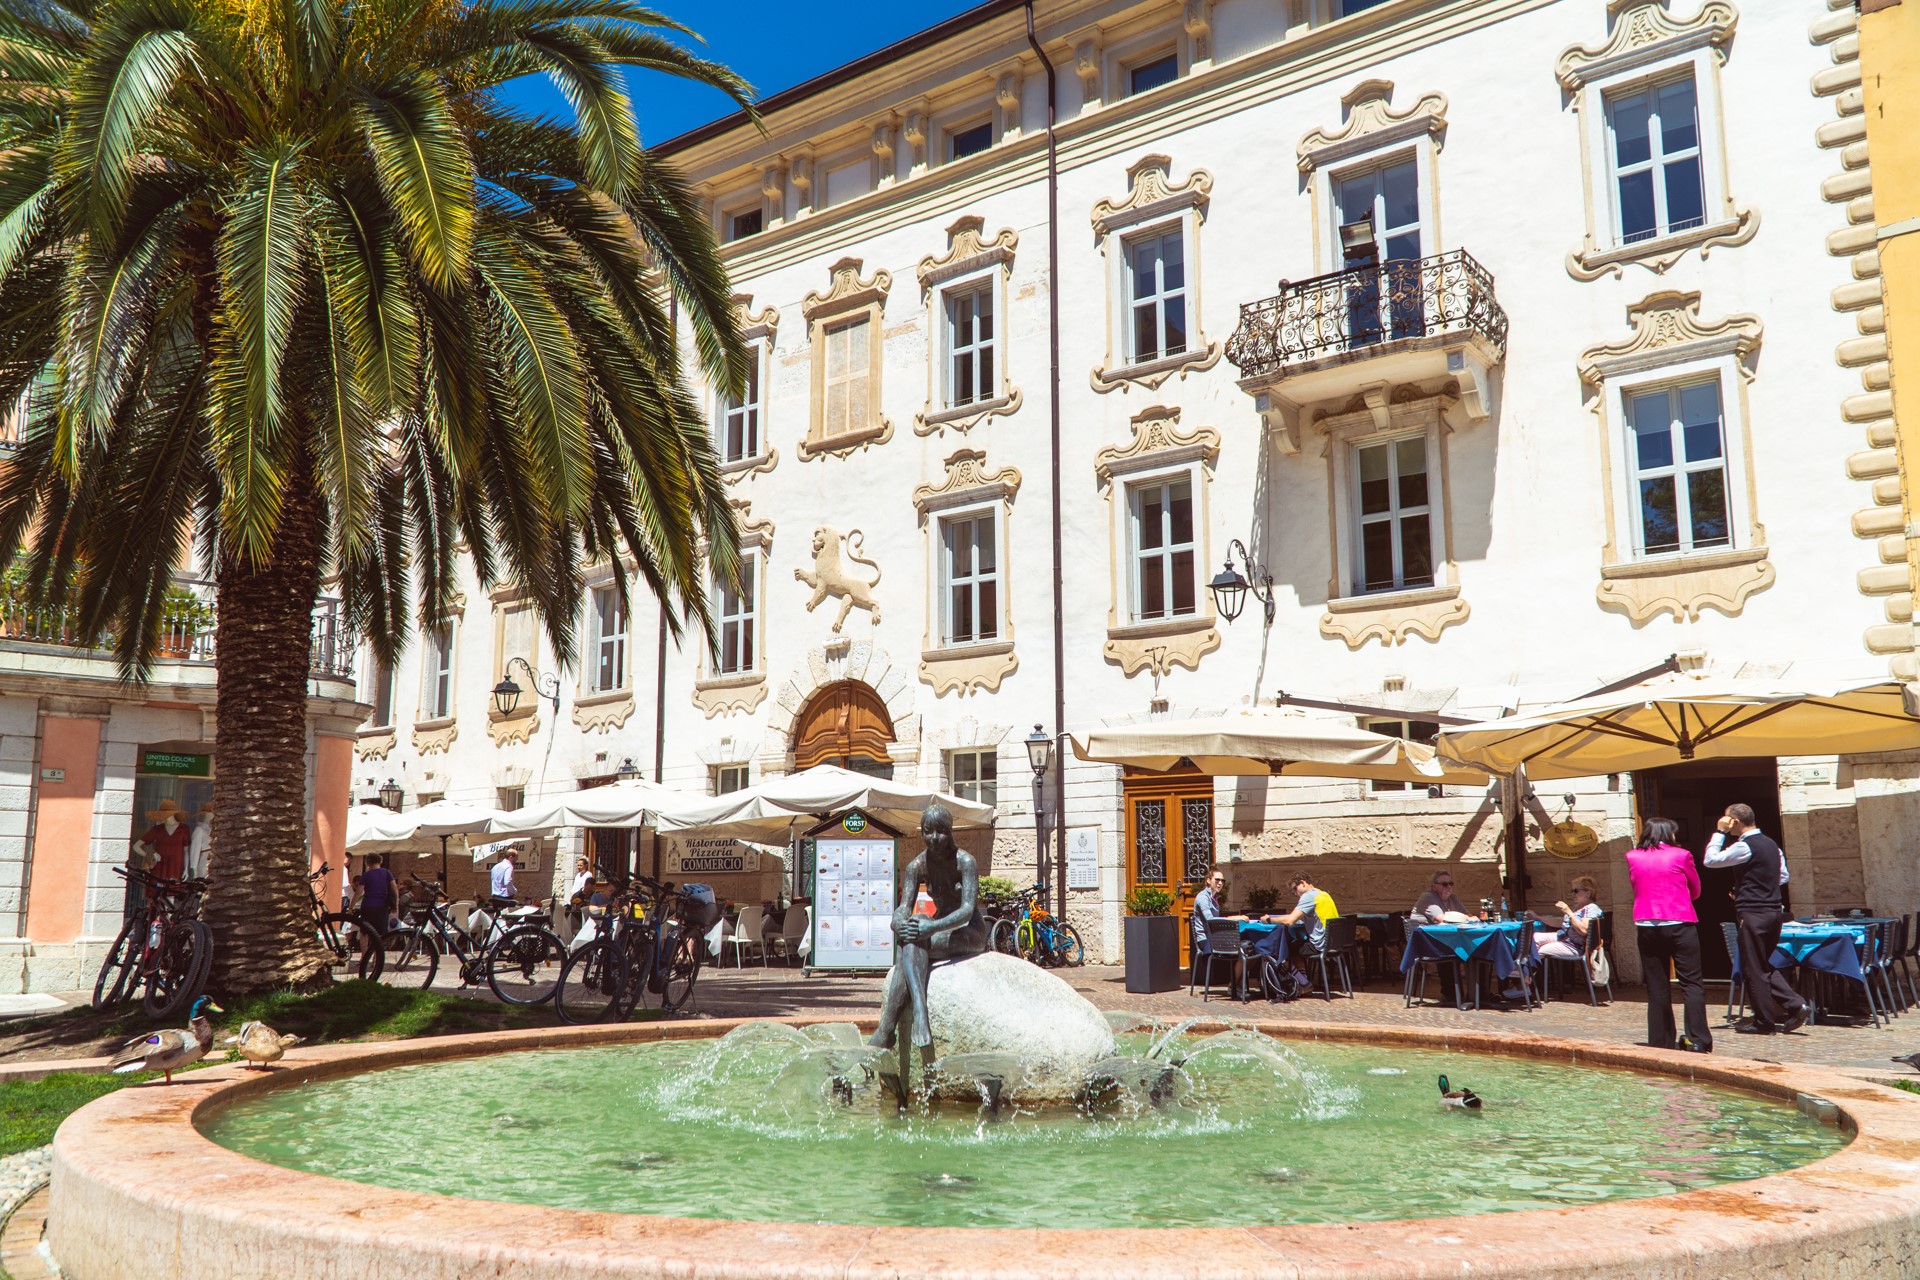 Palma nad fontanną w Riva del Garda